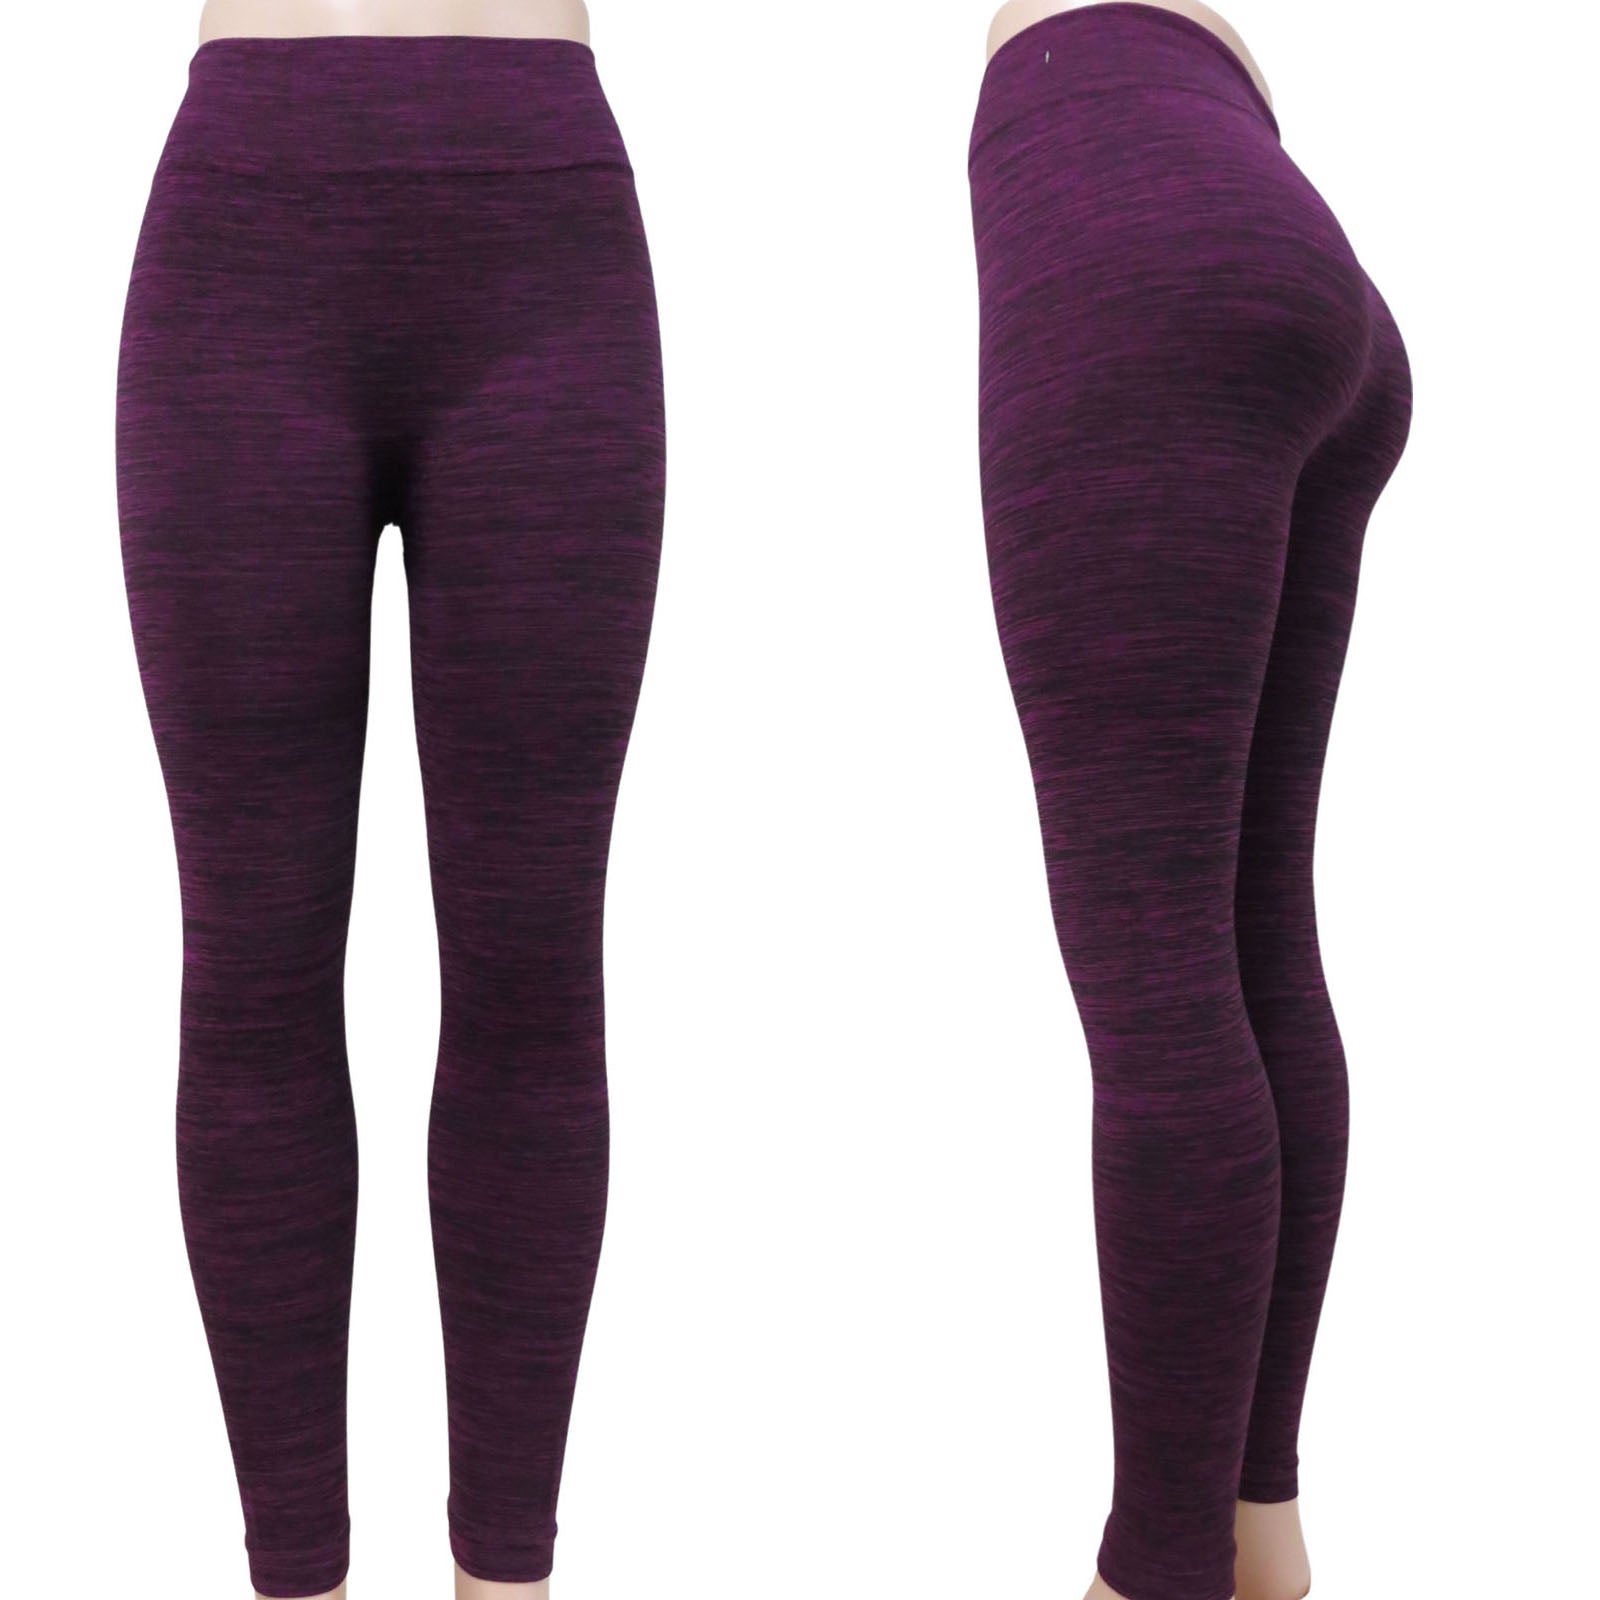 wine gray wholesale leggings in bulk space dye pattern full length